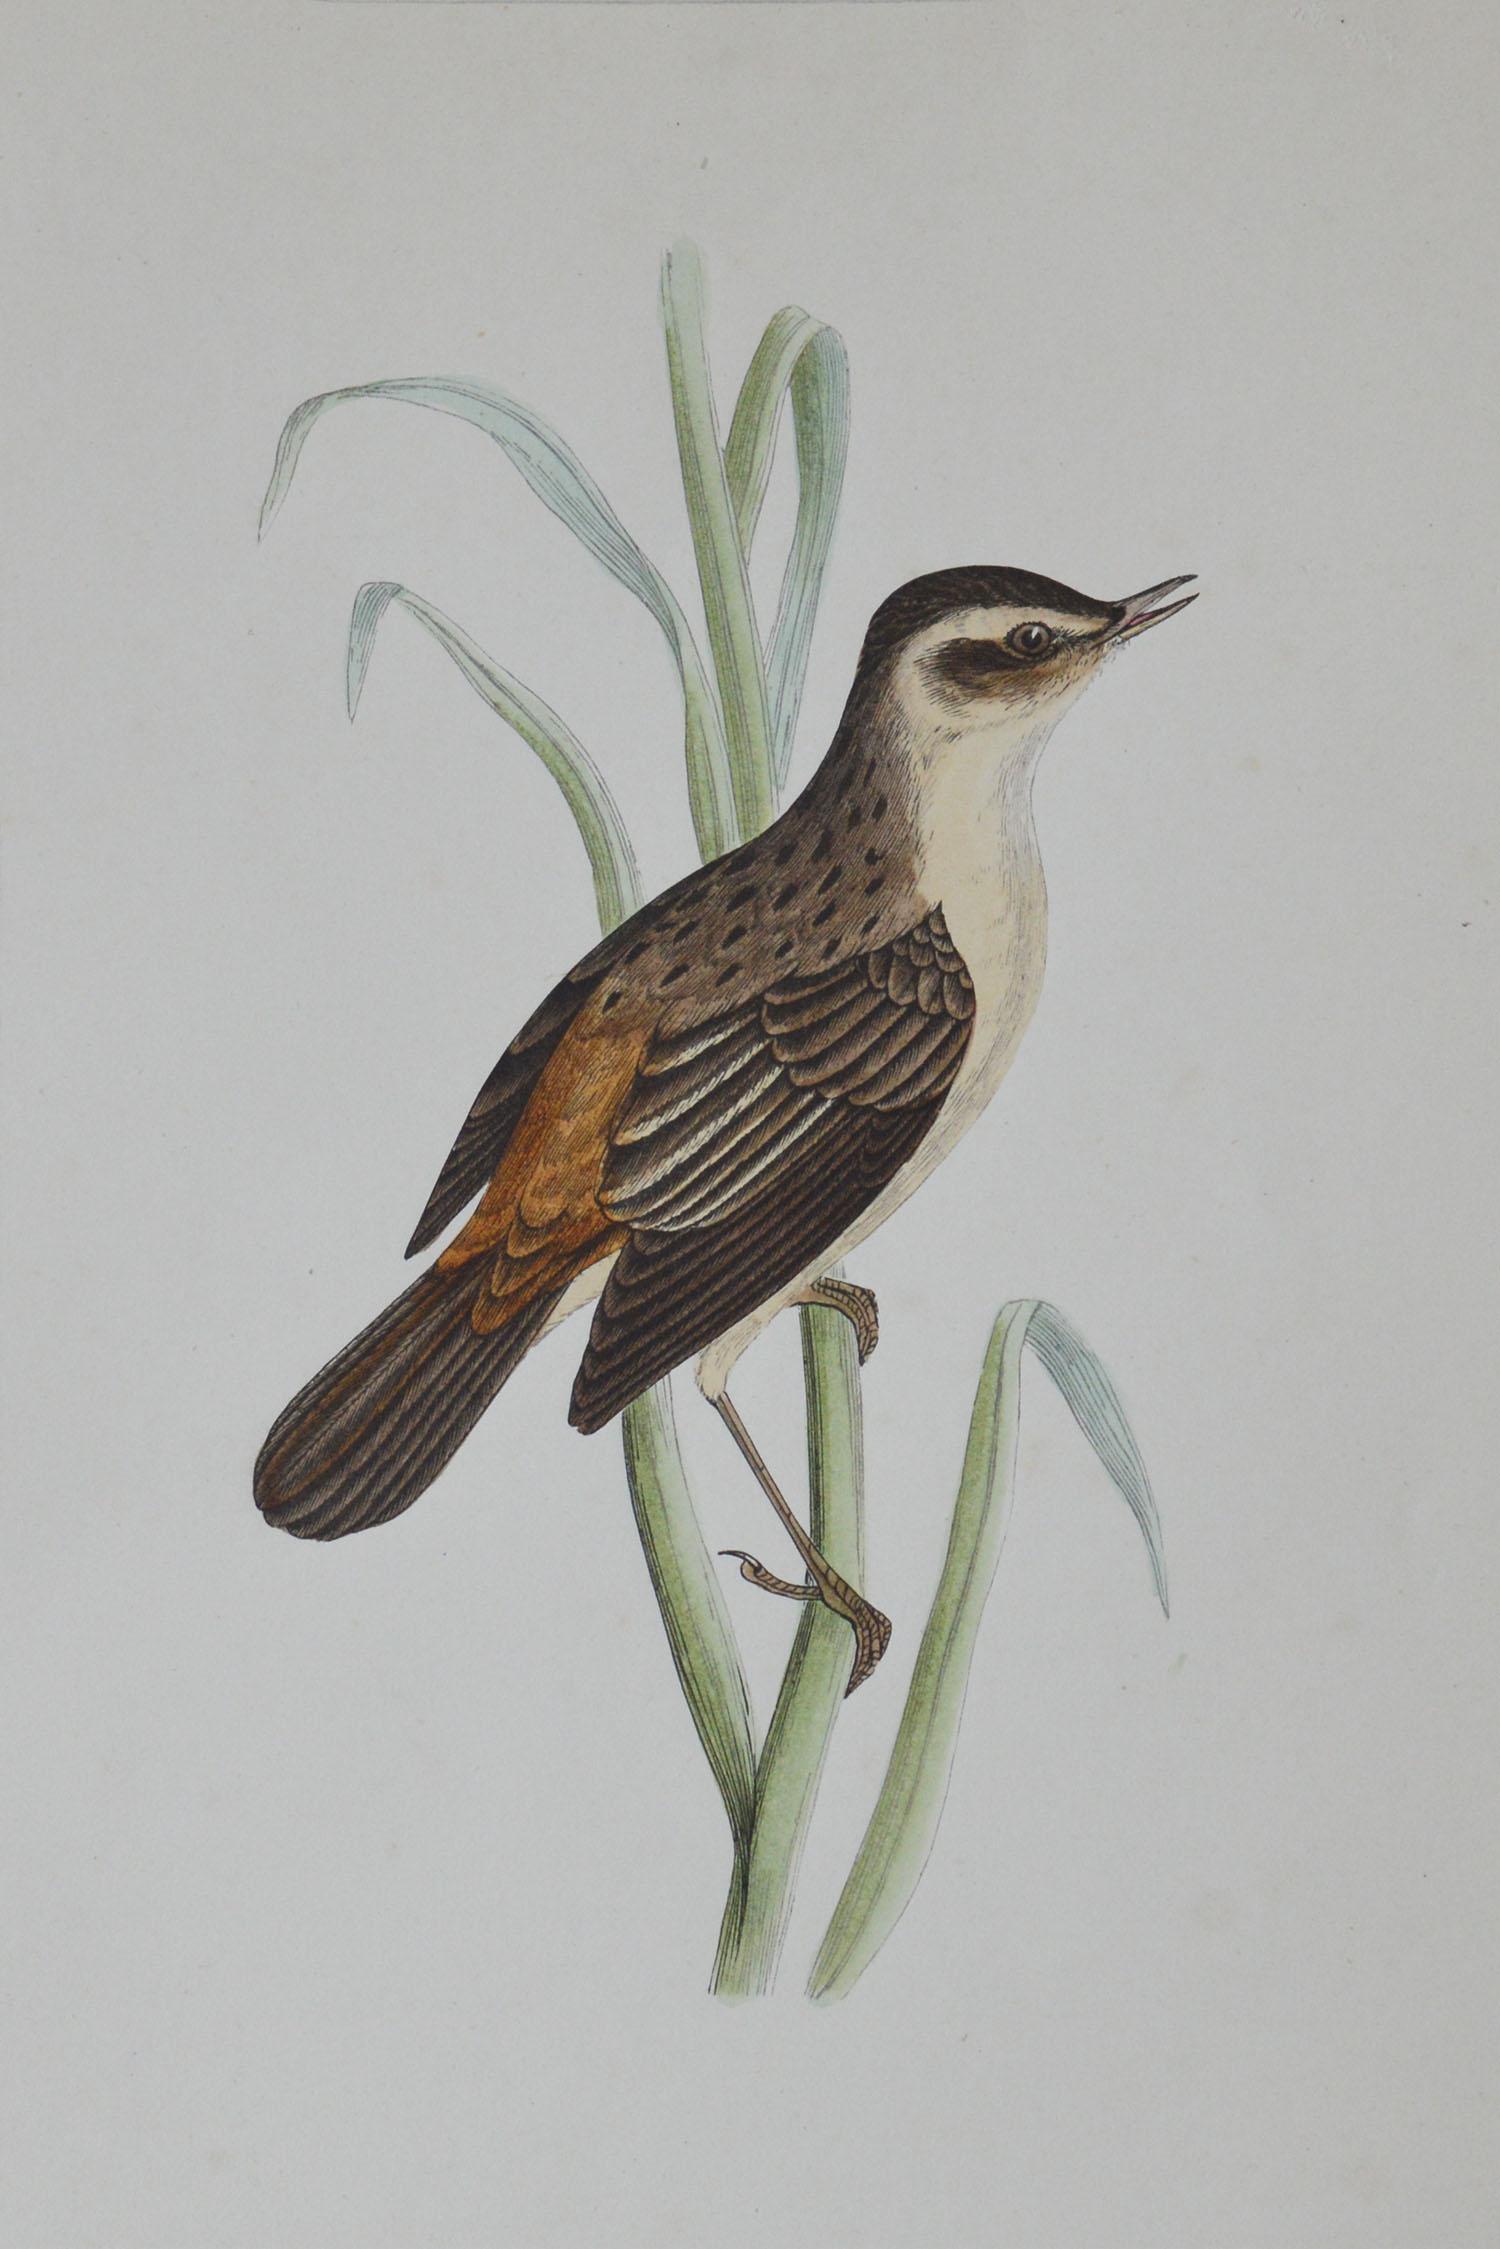 Folk Art Original Antique Bird Print, the Sedge Warbler, circa 1850